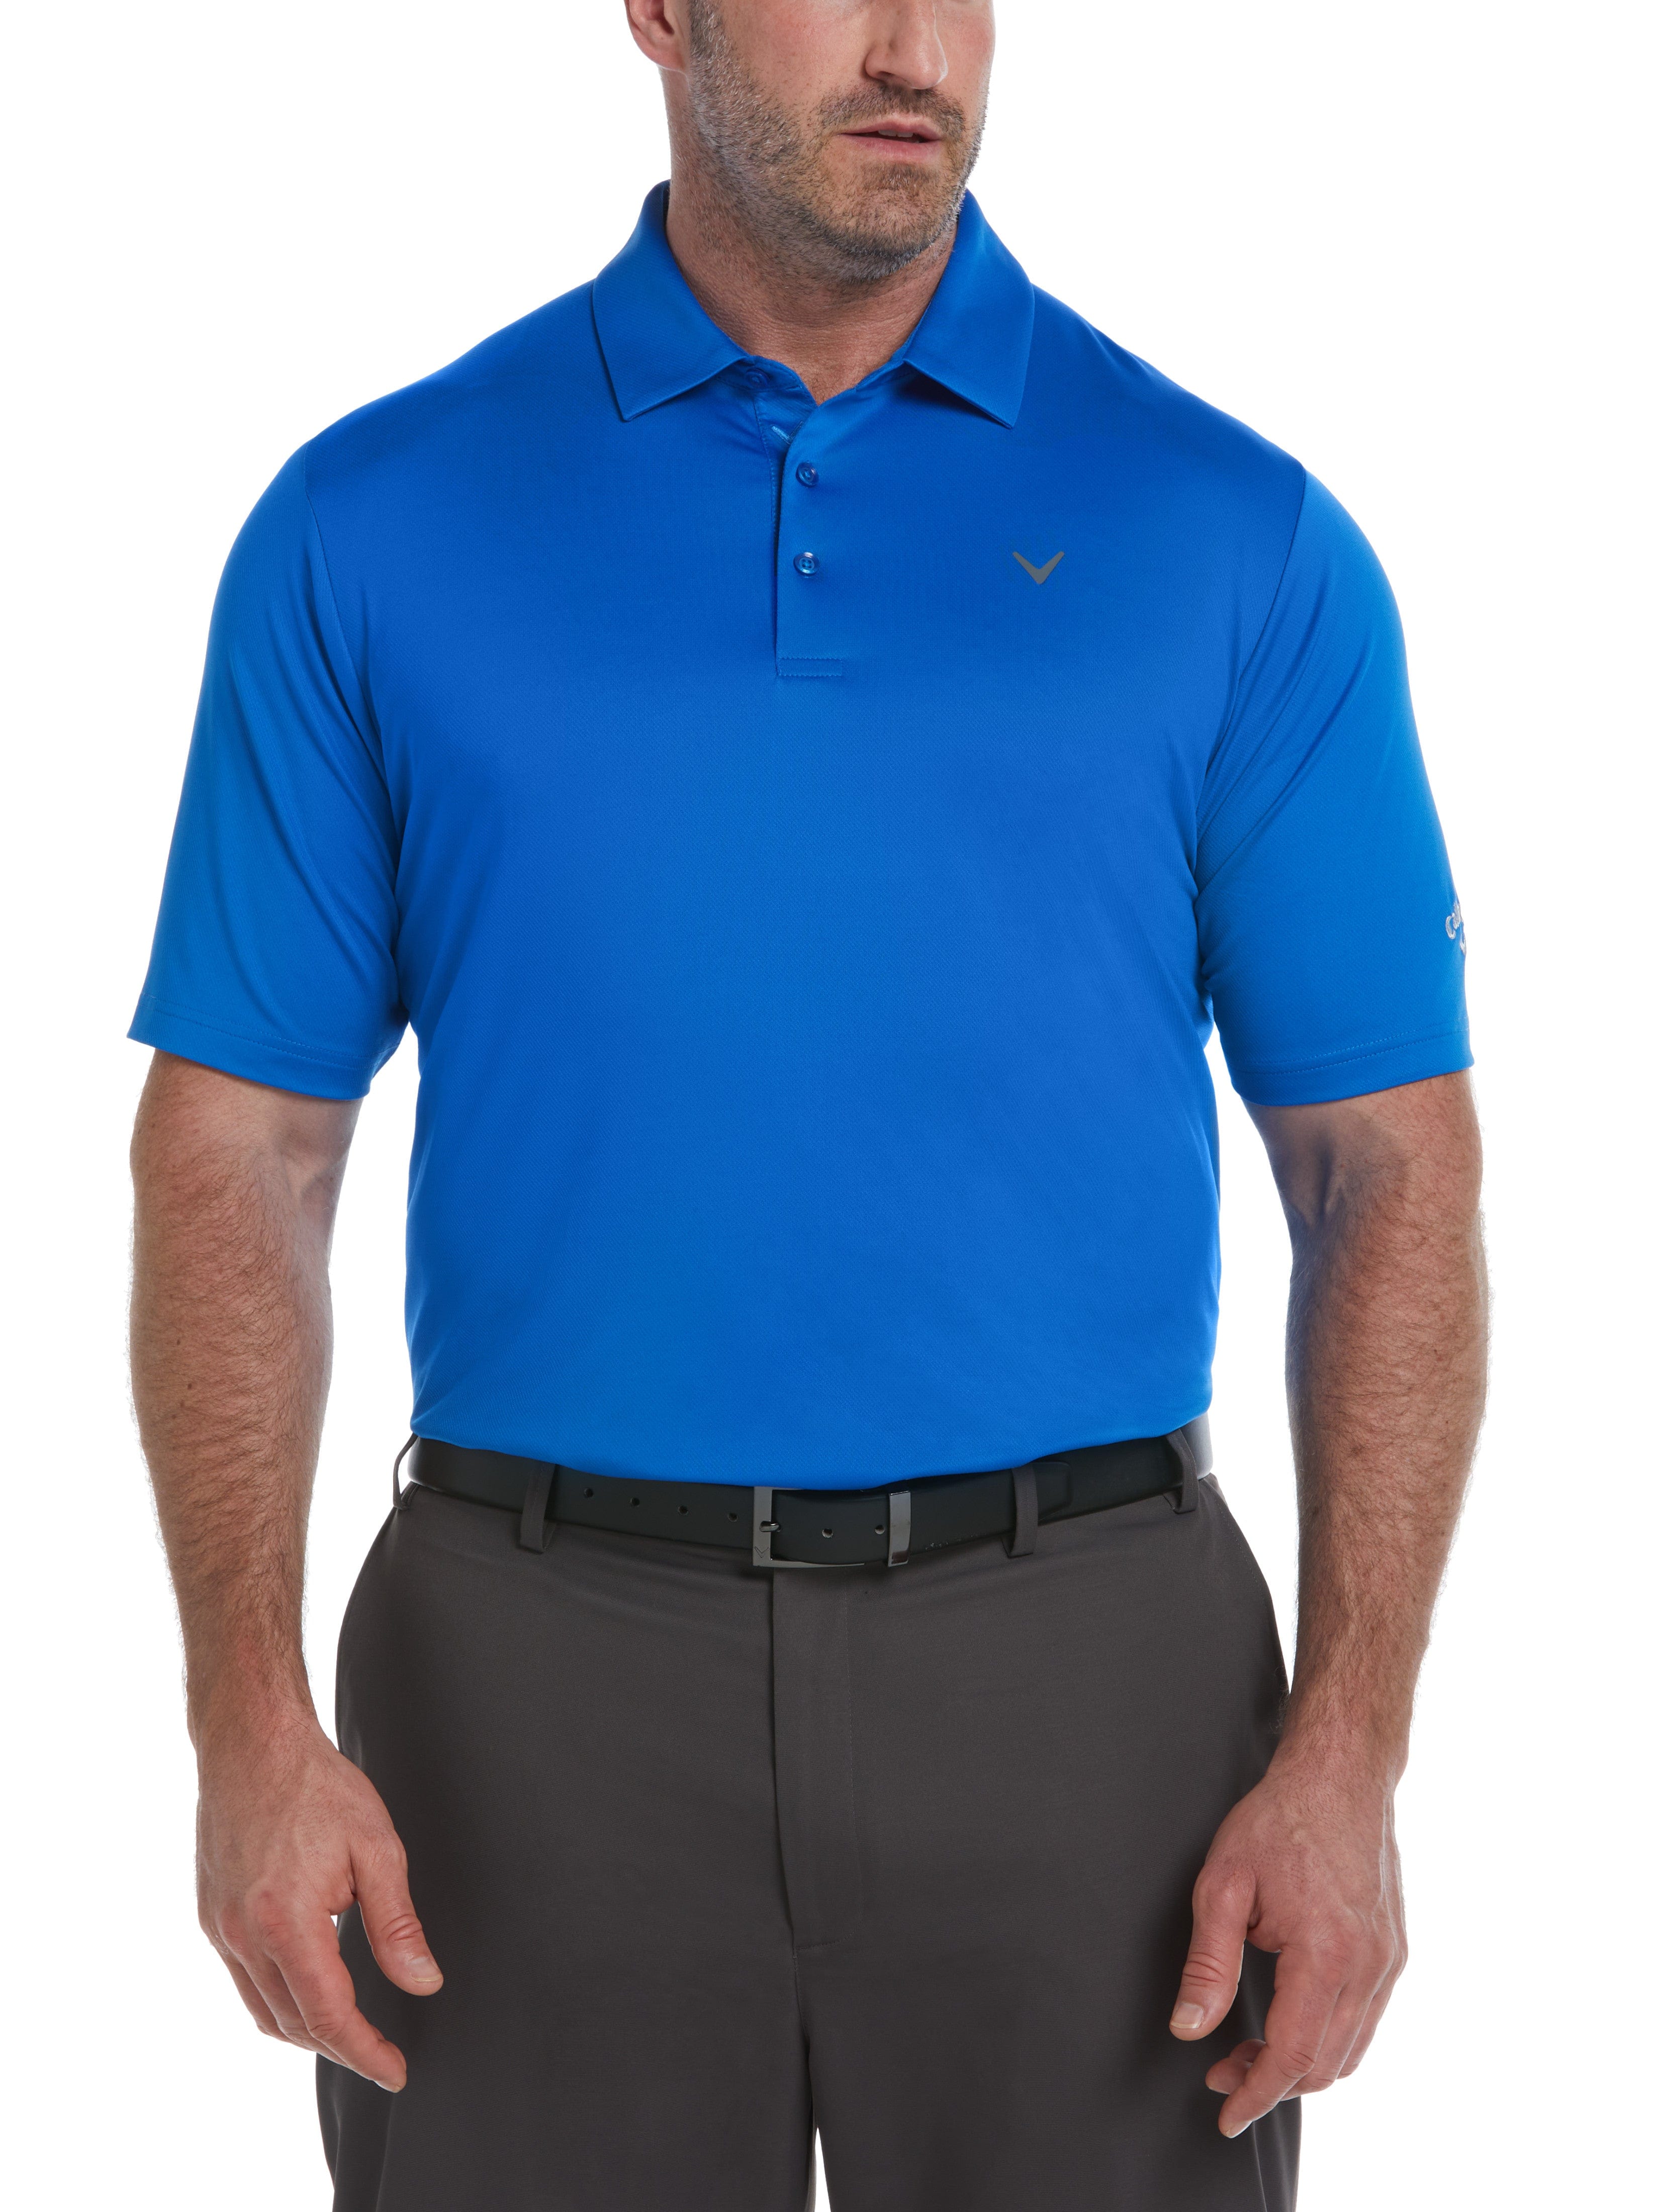 Callaway Apparel Mens Big & Tall Solid Swing Tech Golf Polo Shirt, Size 4X, Magnetic Blue, Polyester/Elastane | Golf Apparel Shop